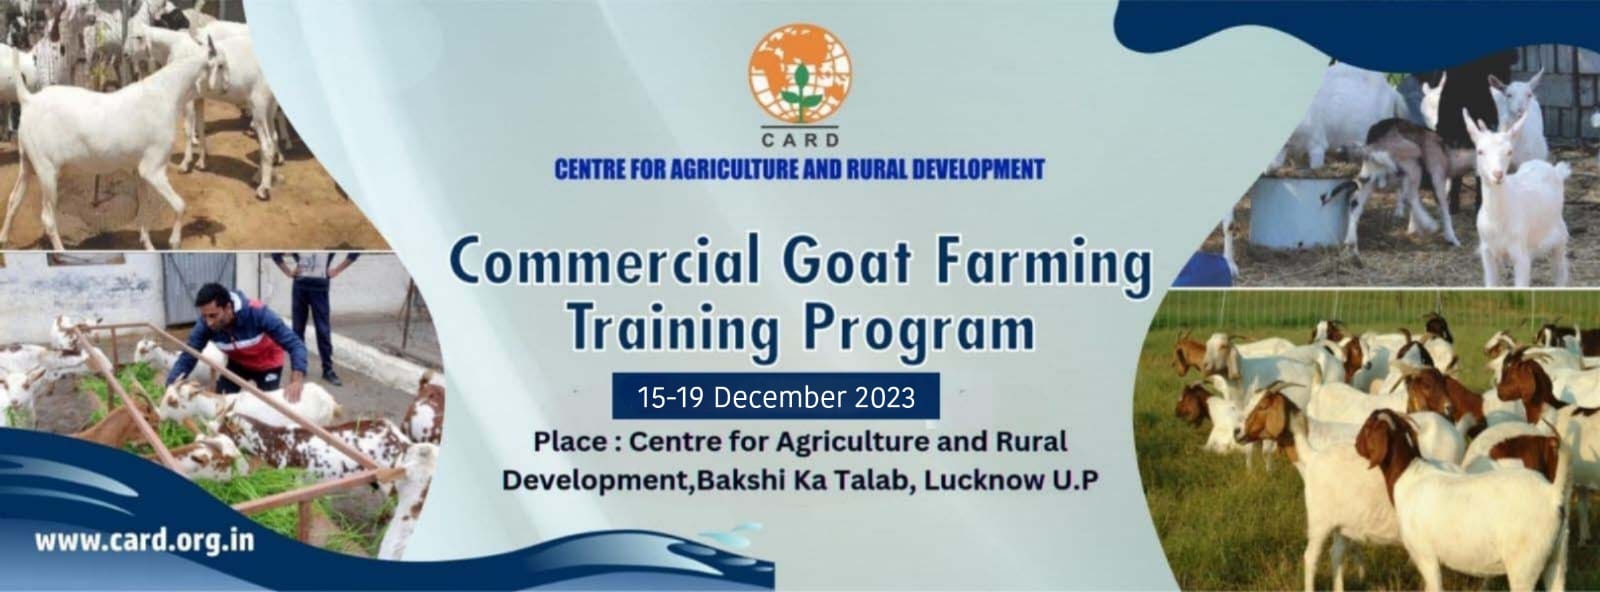 COMMERCIAL GOAT FARMING TRAINING PROGRAM 2023